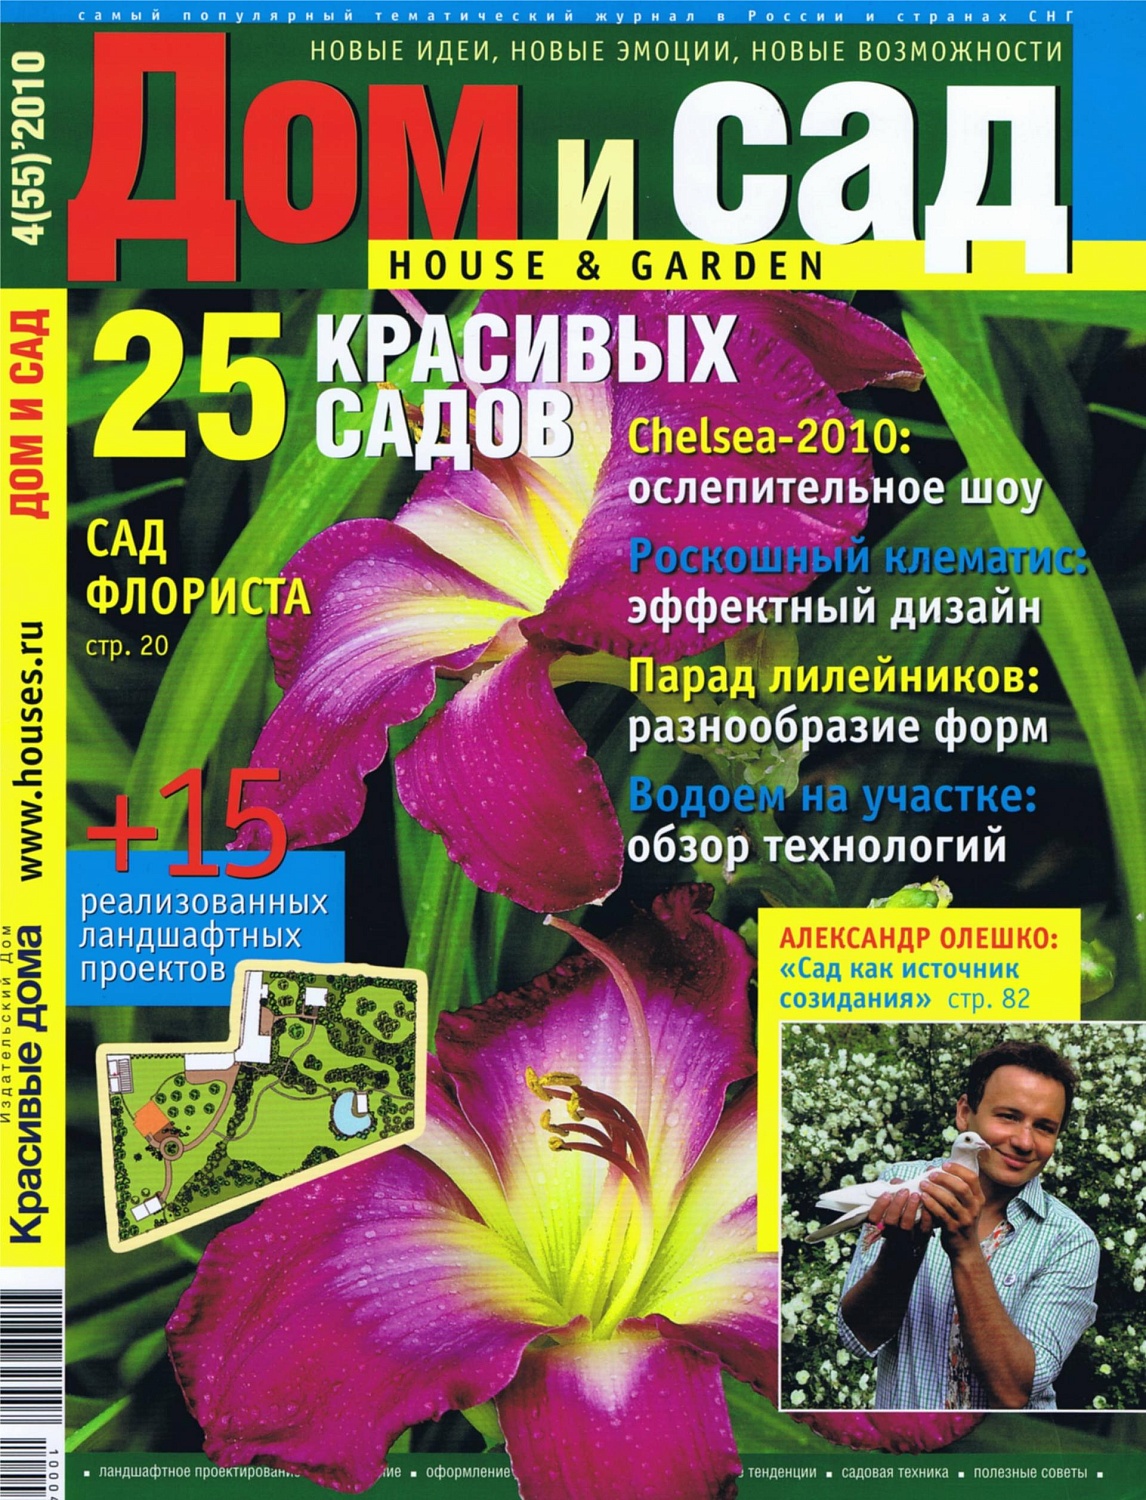 Журнал "Дом и сад" - "Сад гортензий" 2010